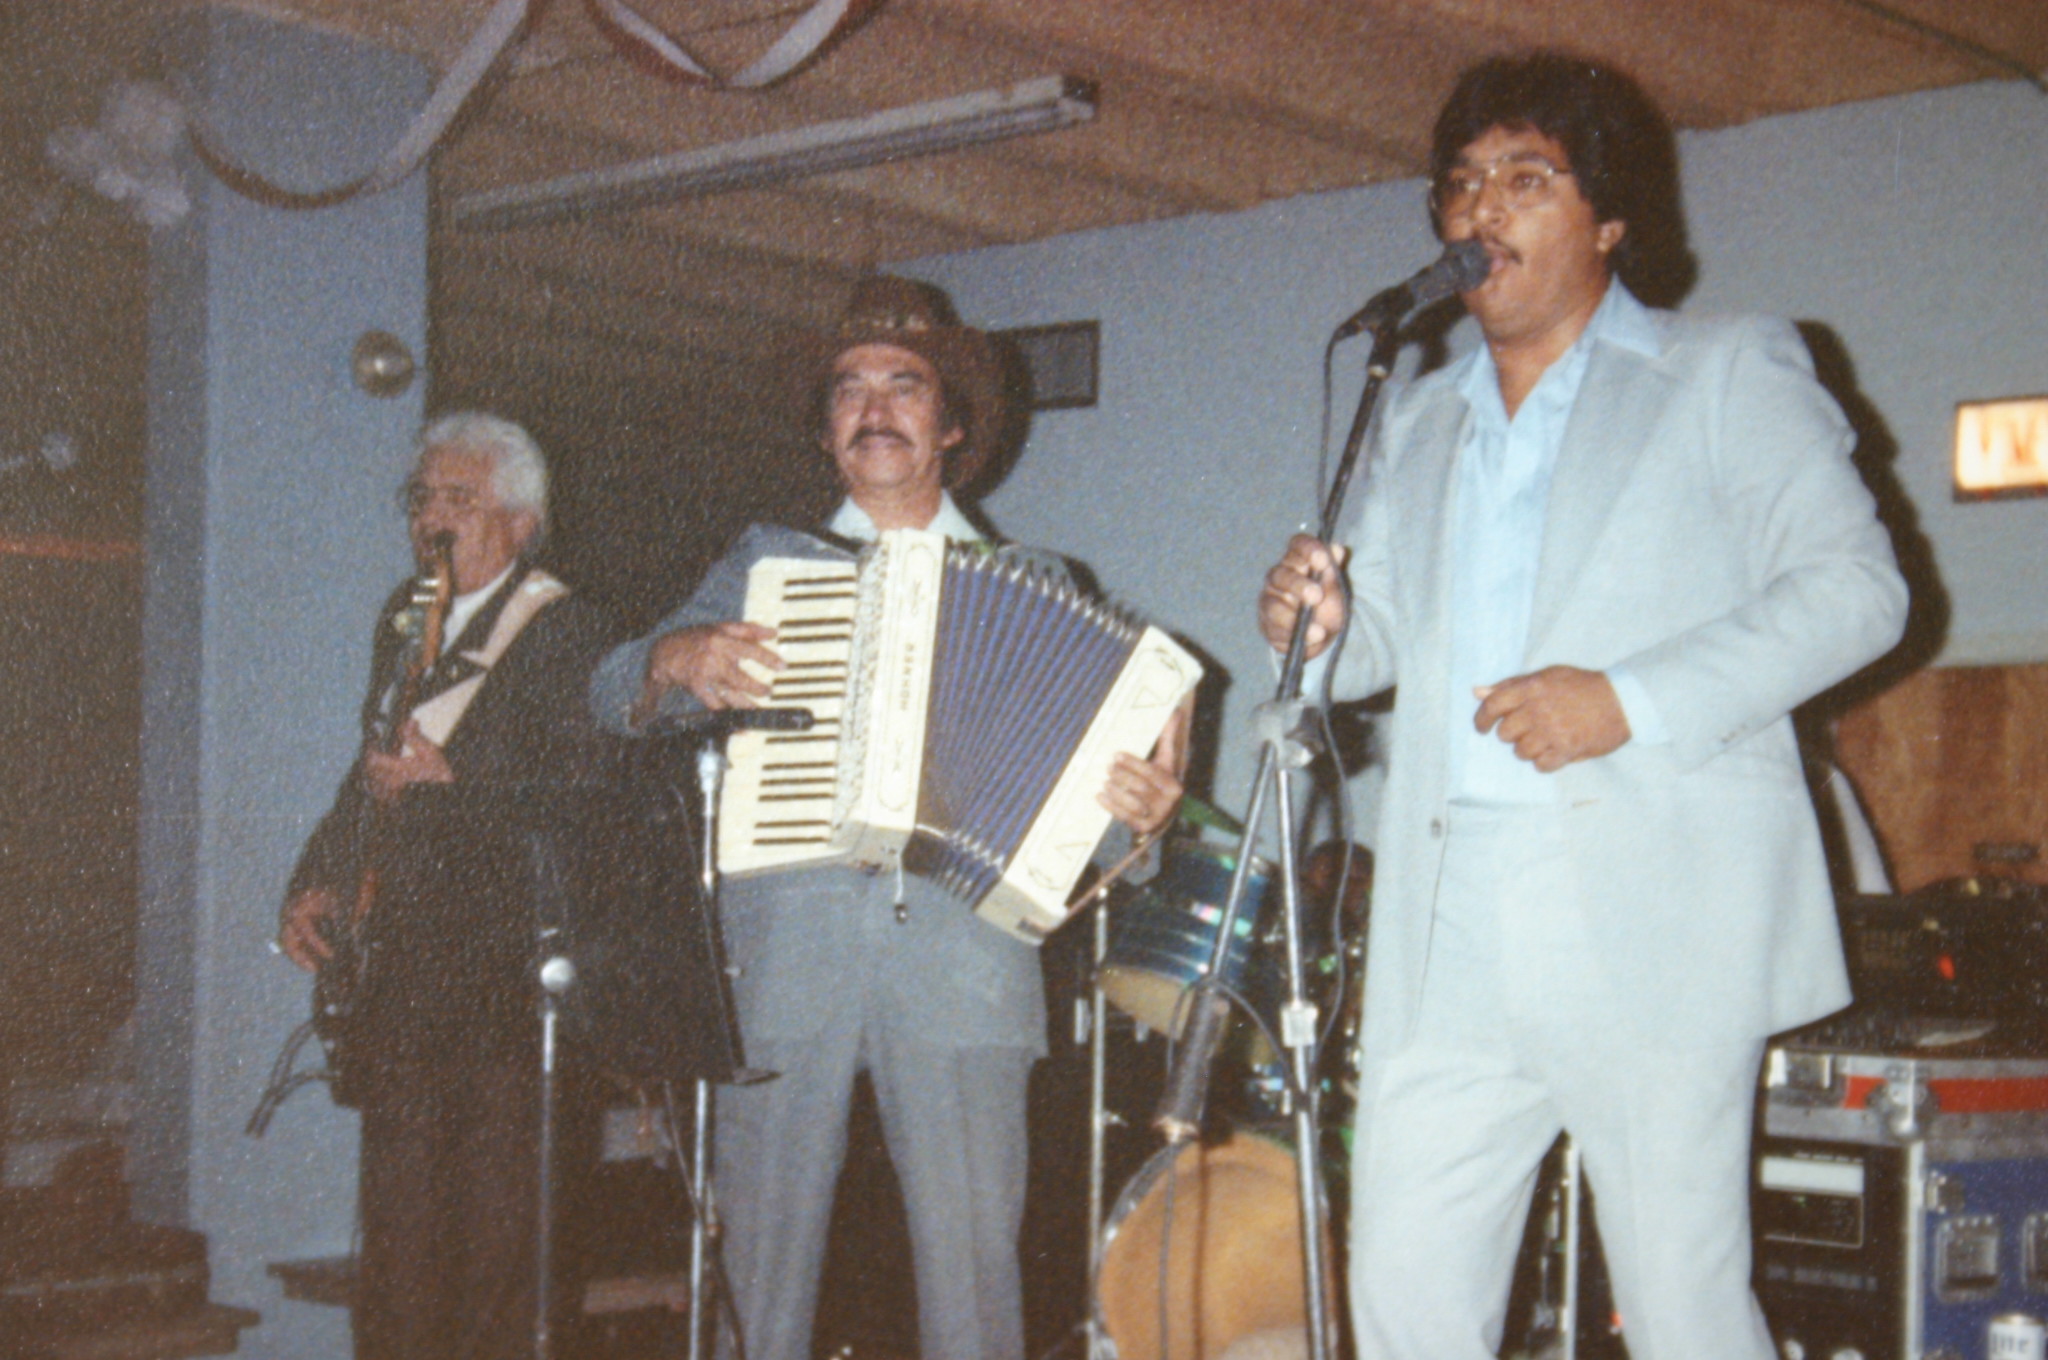 Agapito y Arnaldo performing